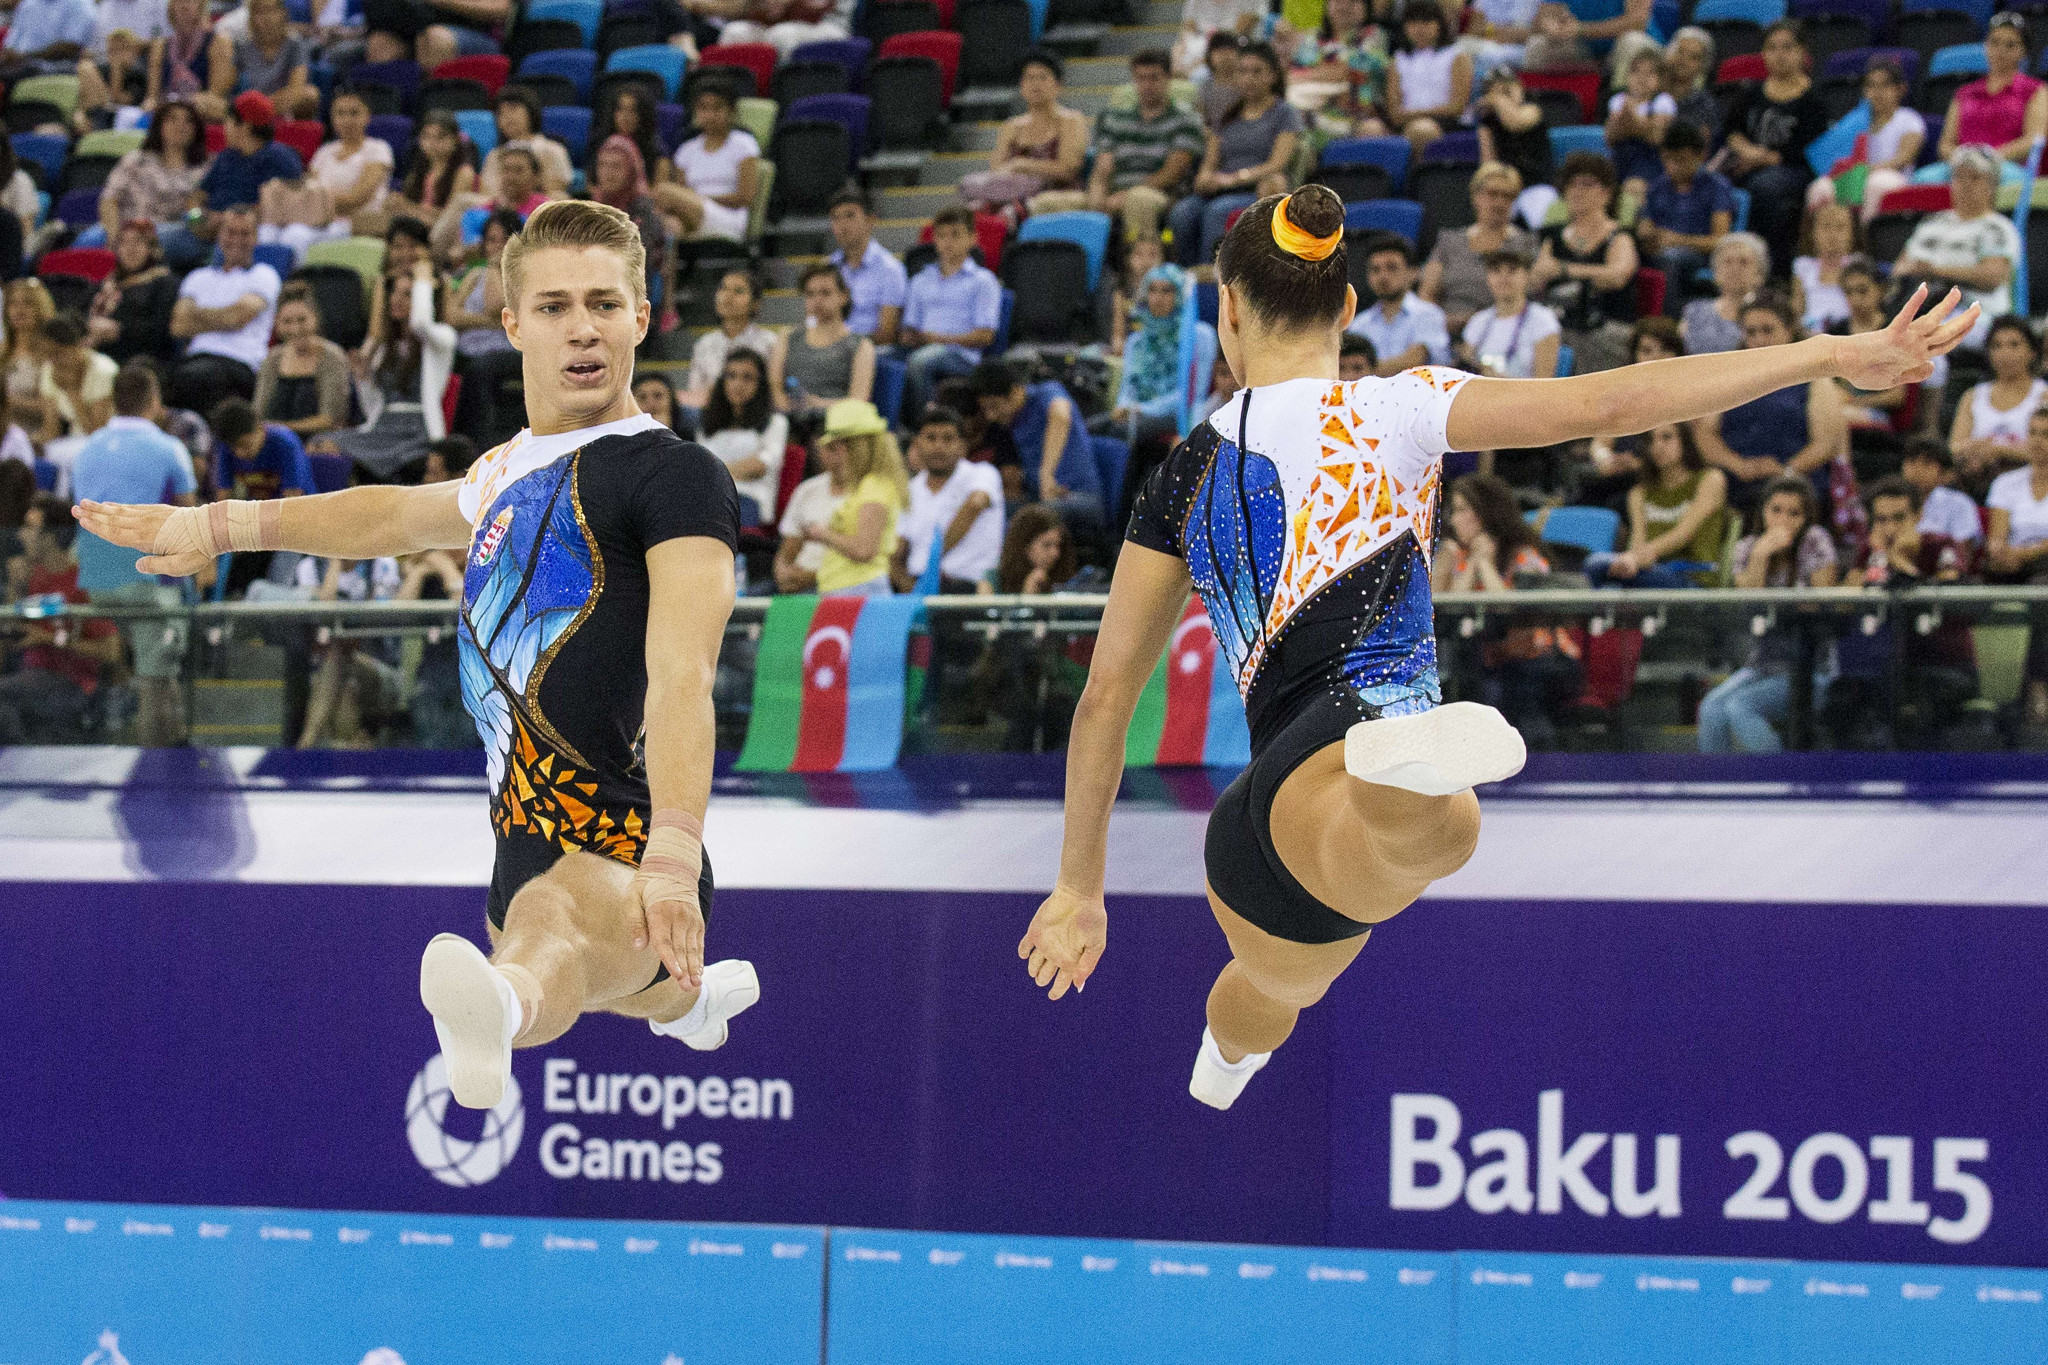 World and European champions converge on Baku for Aerobic Gymnastics European Championships 